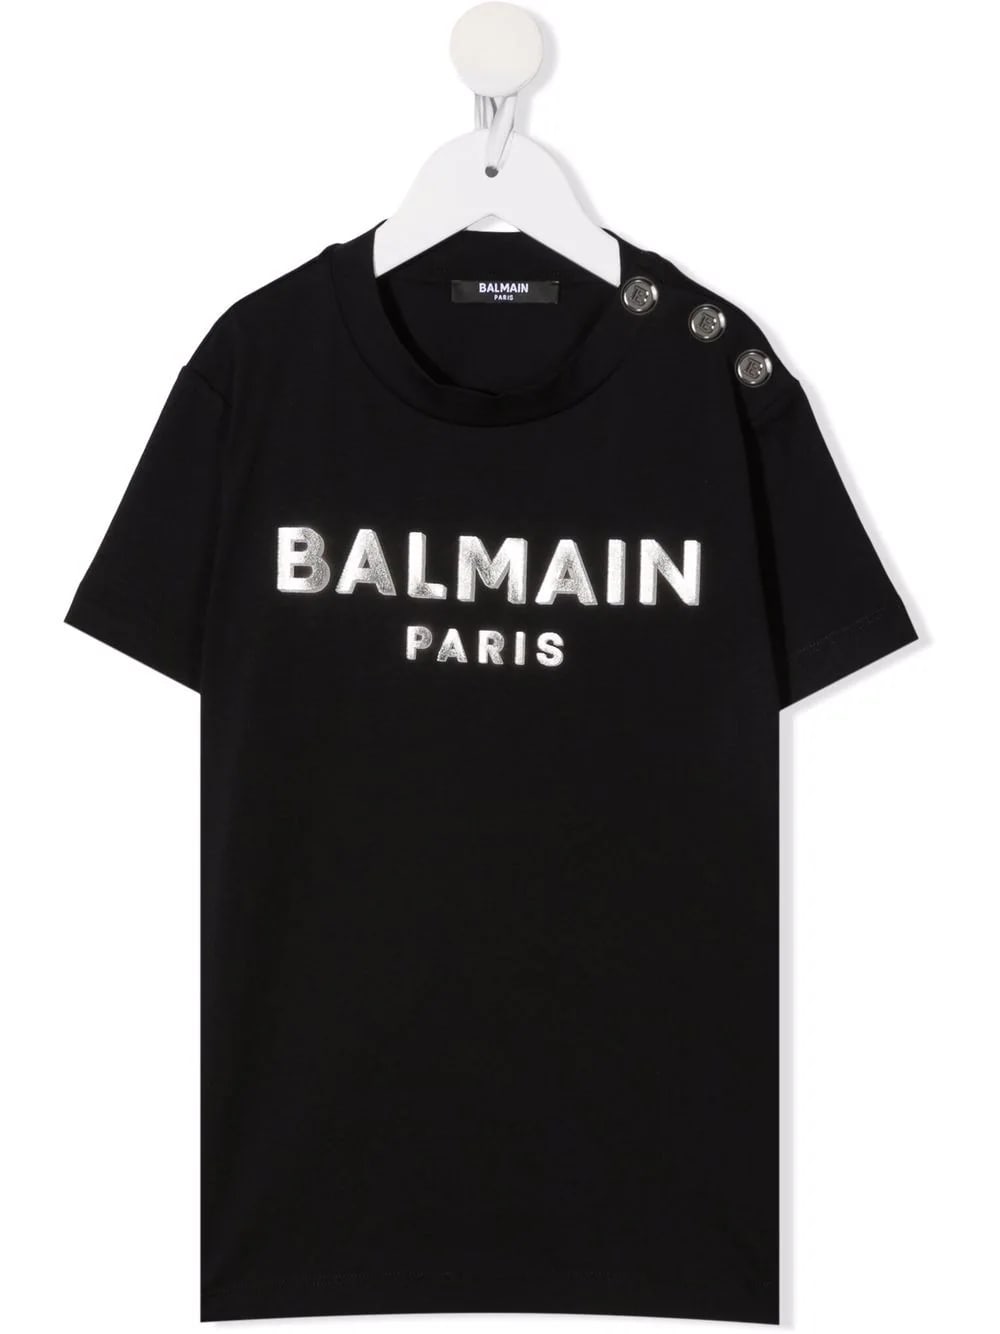 Balmain Kids Black T-shirt With Metallic Logo And Silver Buttons